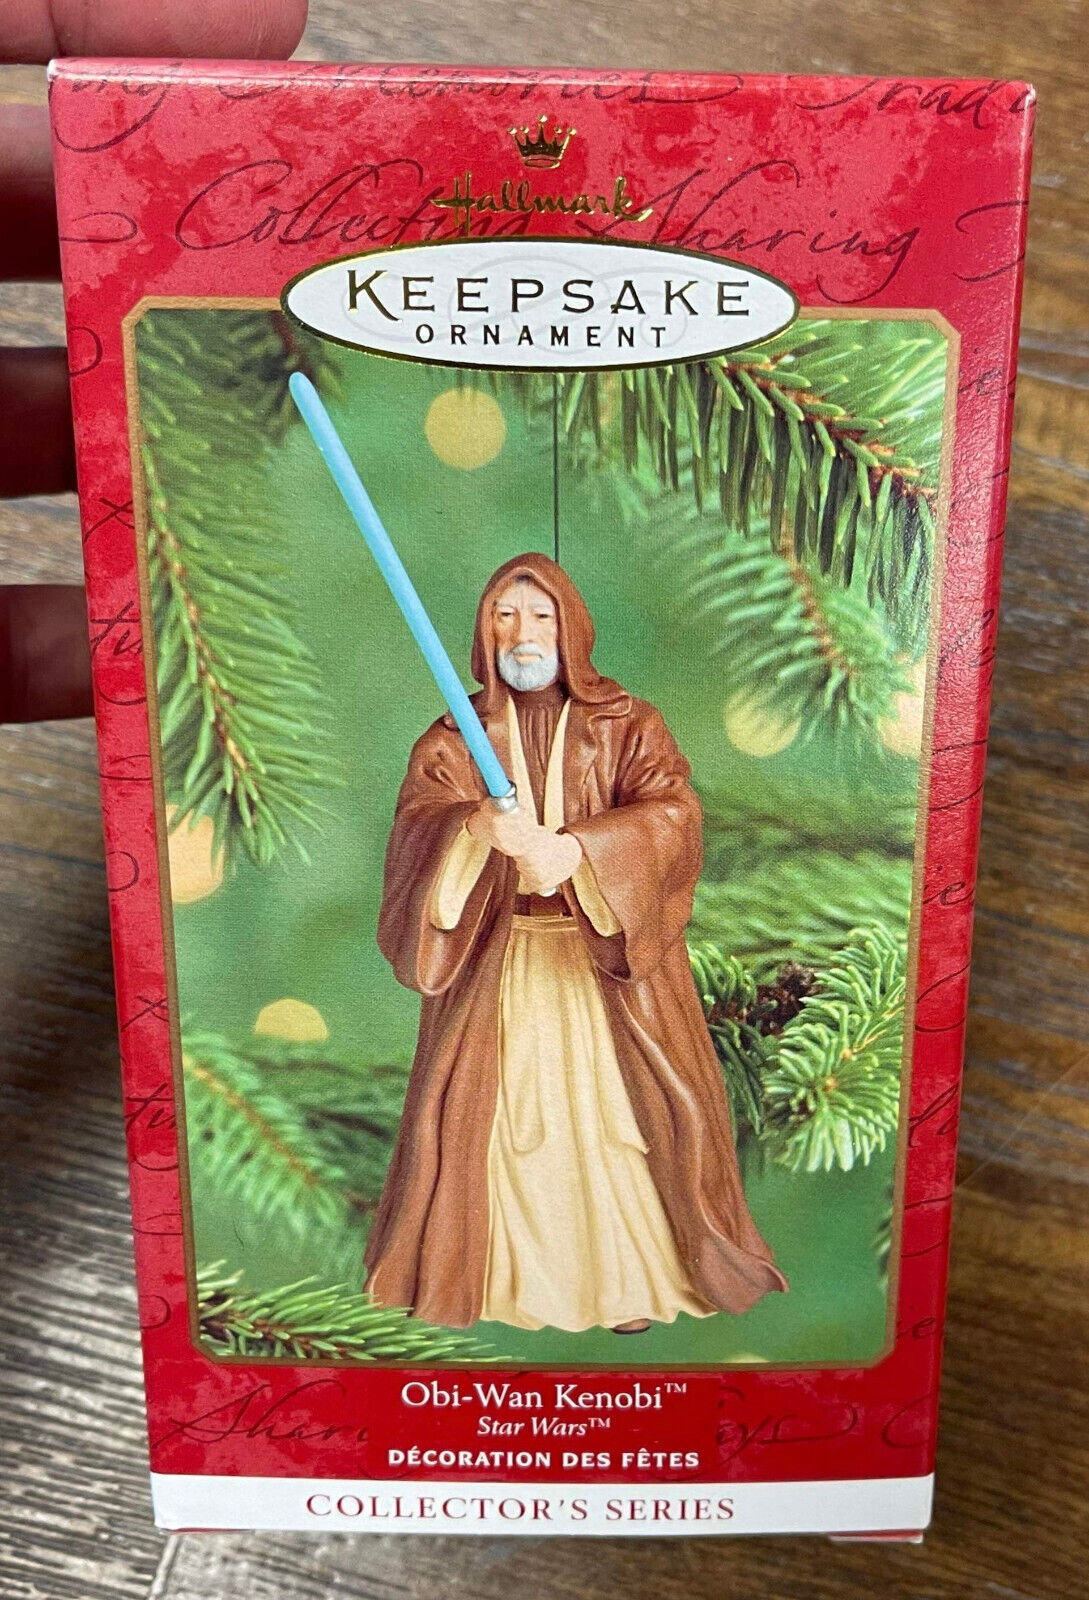 2000 Hallmark Obi-Wan Kenobi Star Wars Keepsake Ornament Empire Strikes Back